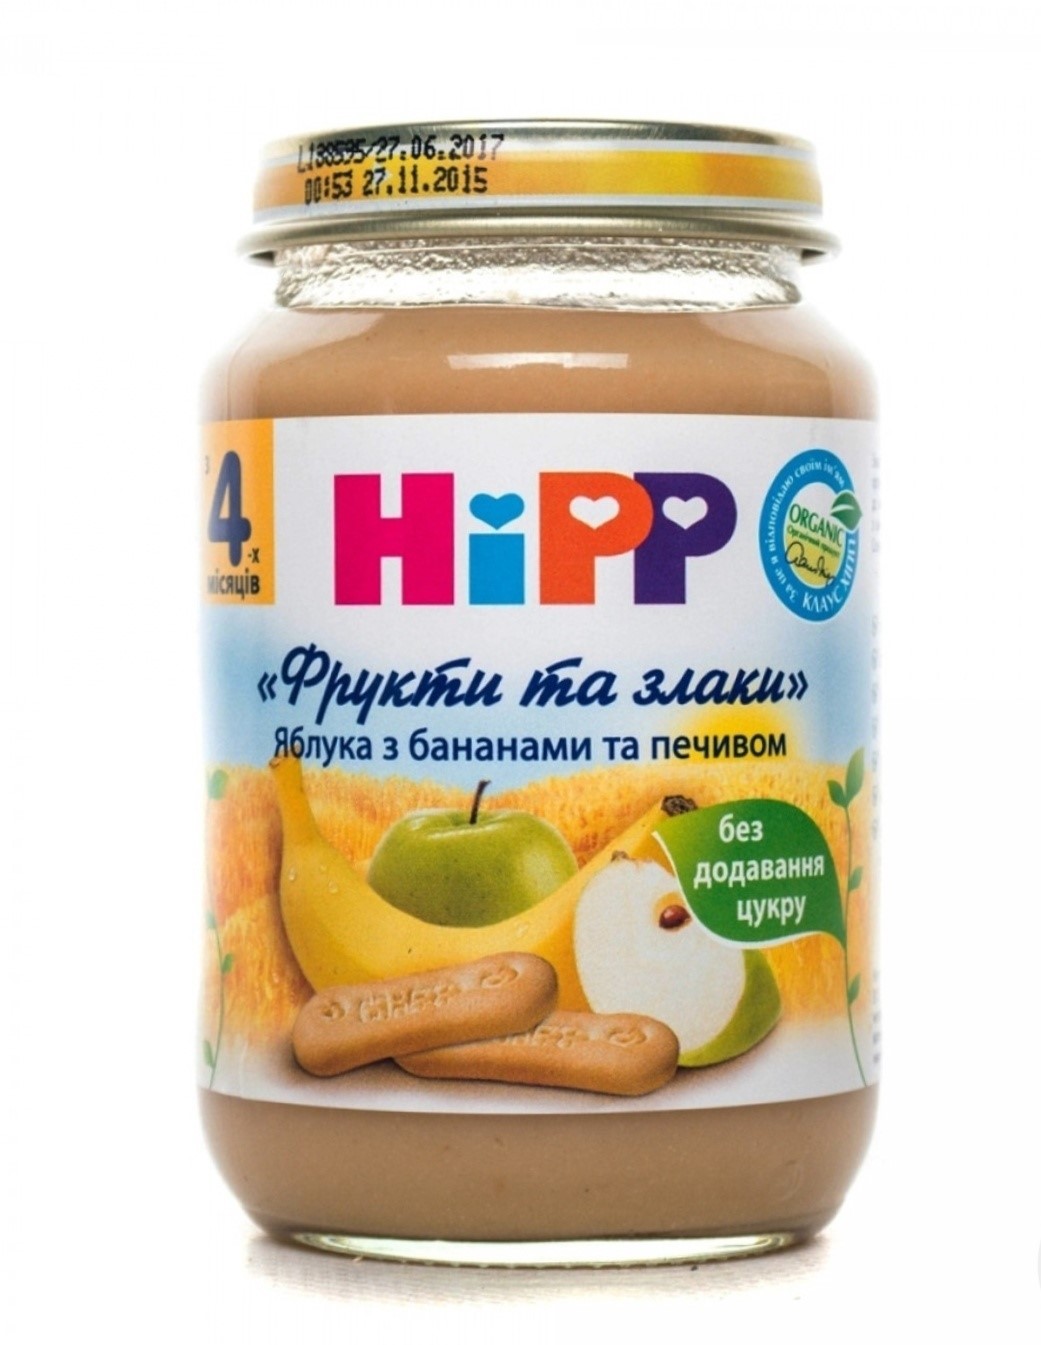 Фото 1 - Пюре HiPP Organic Фрукти та злаки Яблуко-банан-печиво скл/б 190г